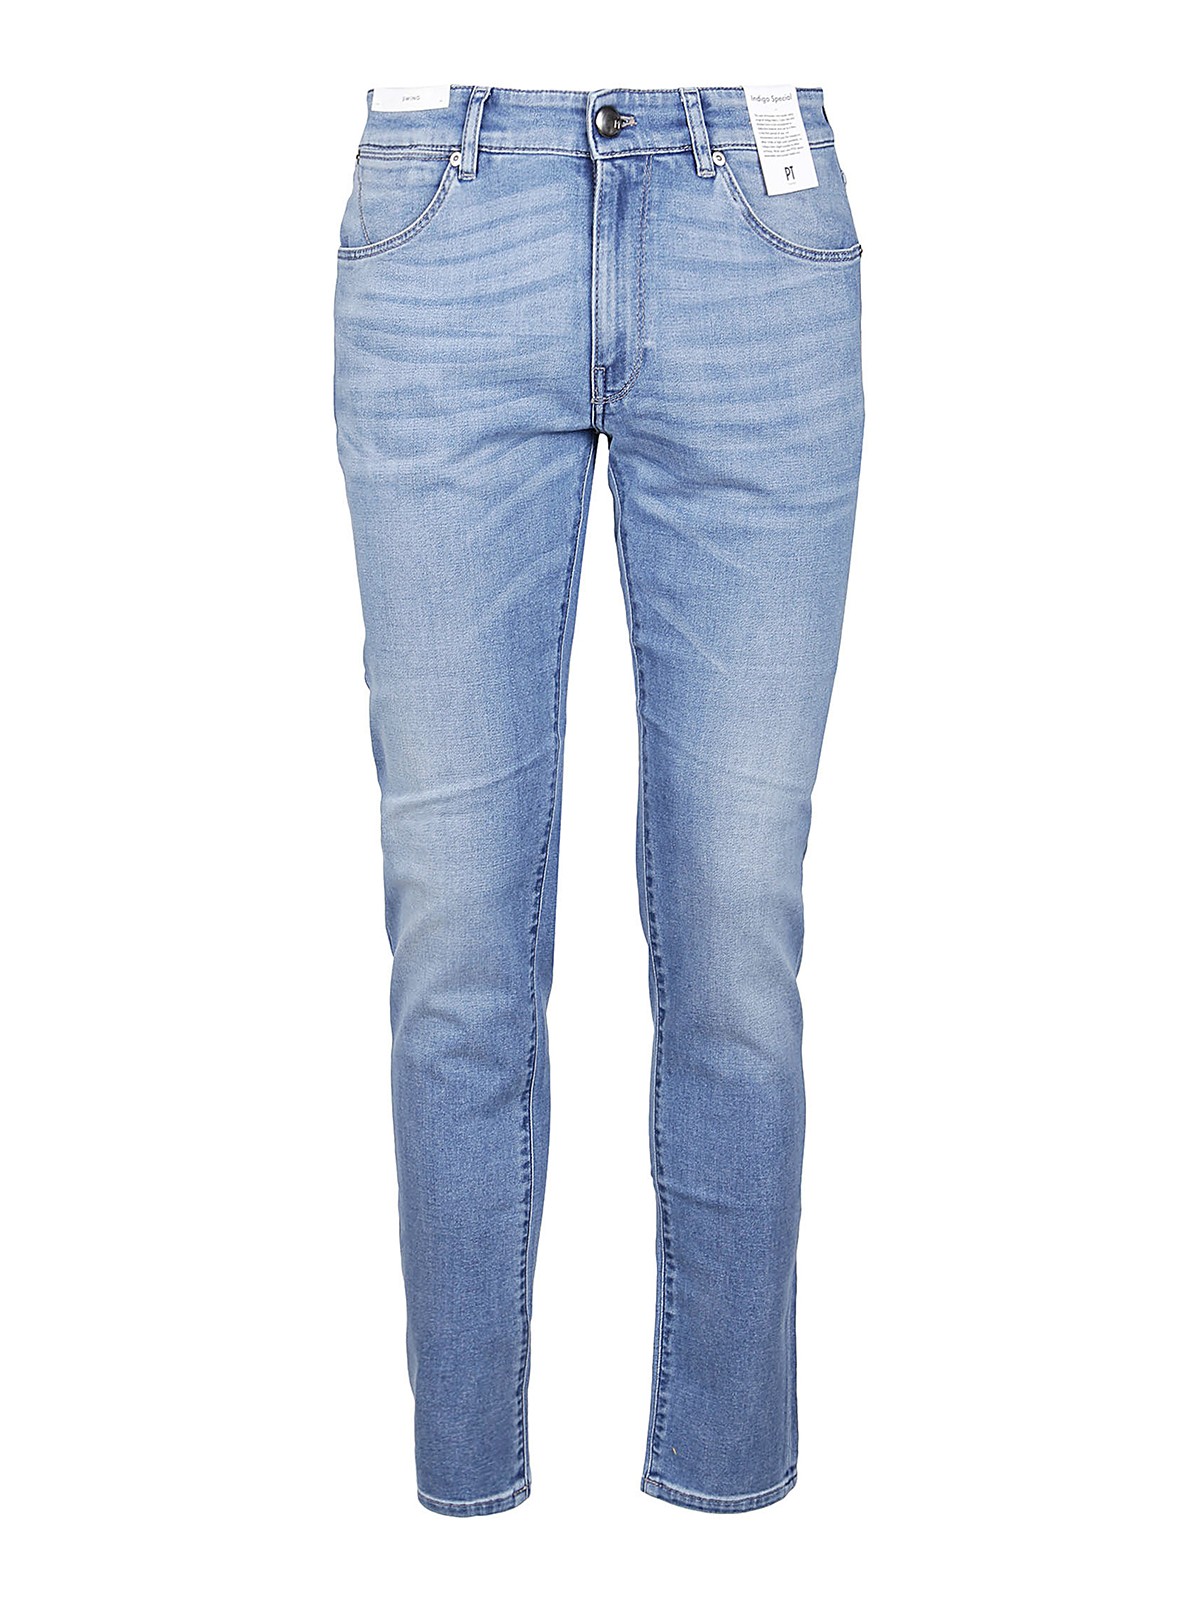 Pt Torino - Swing faded straight leg jeans - straight leg jeans ...